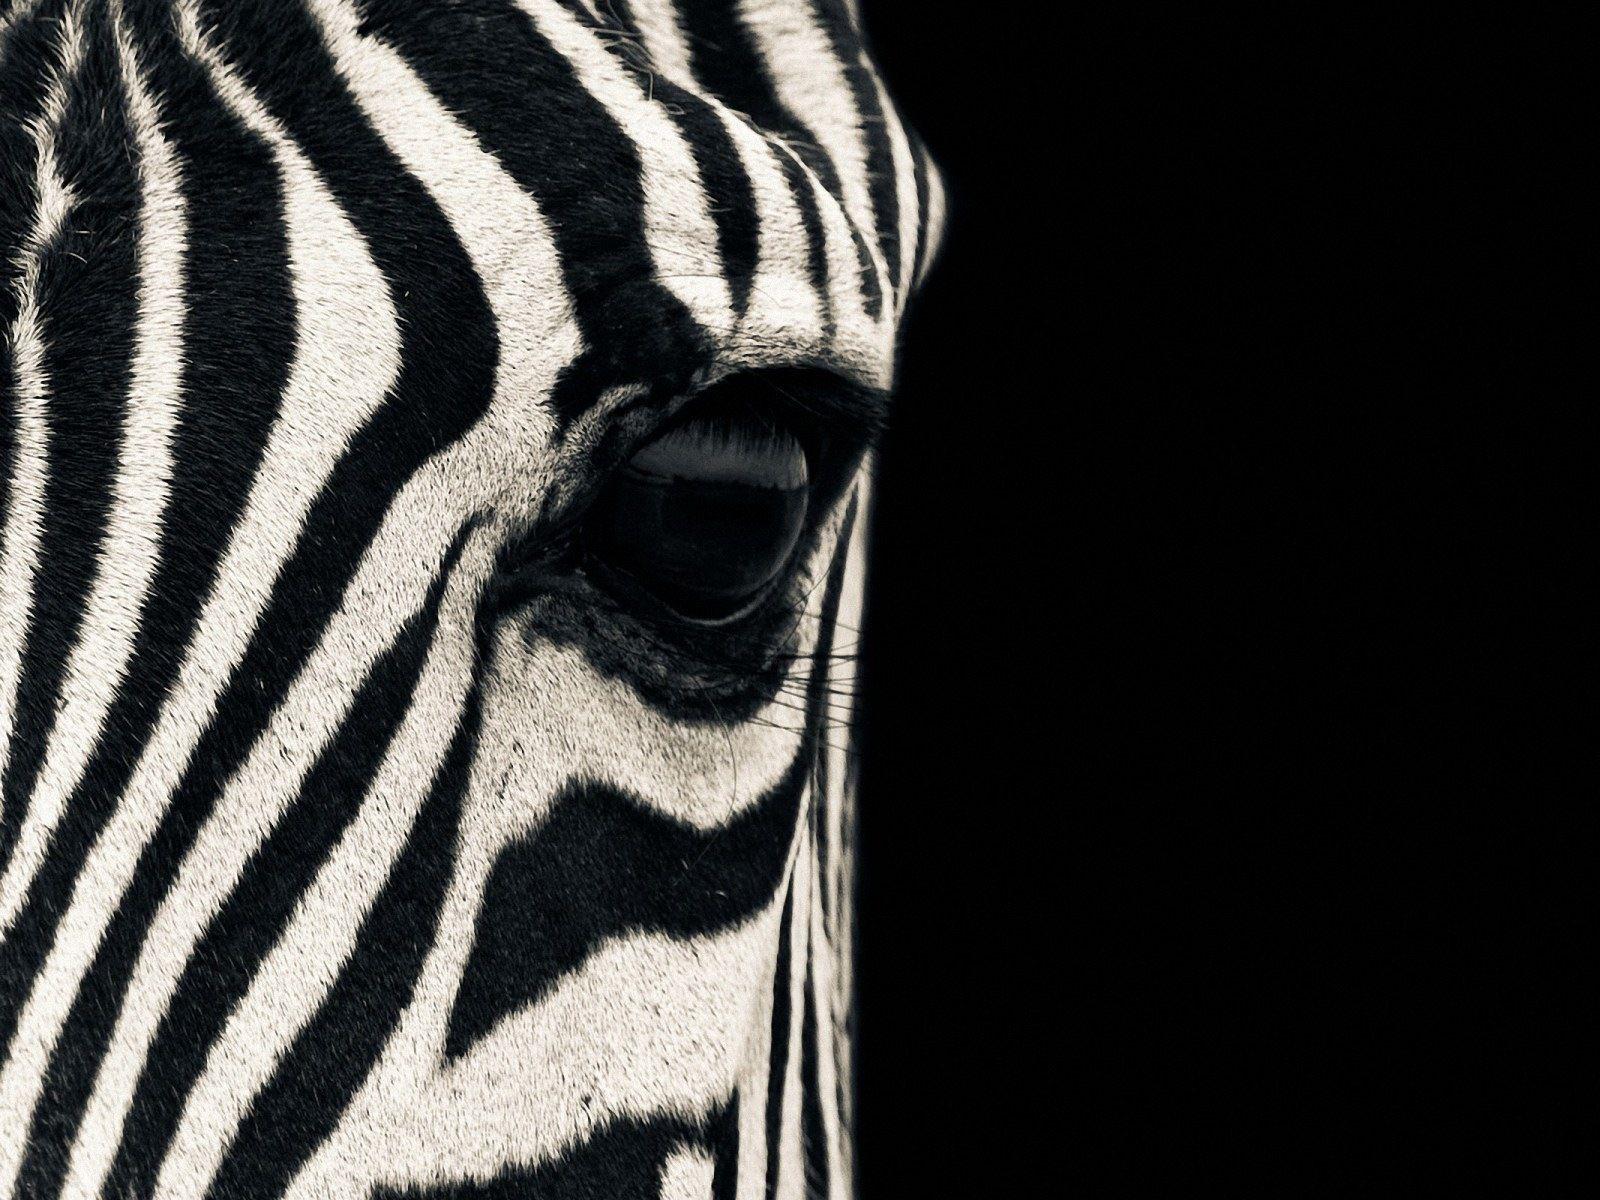 Zebra wallpaper. Zebra